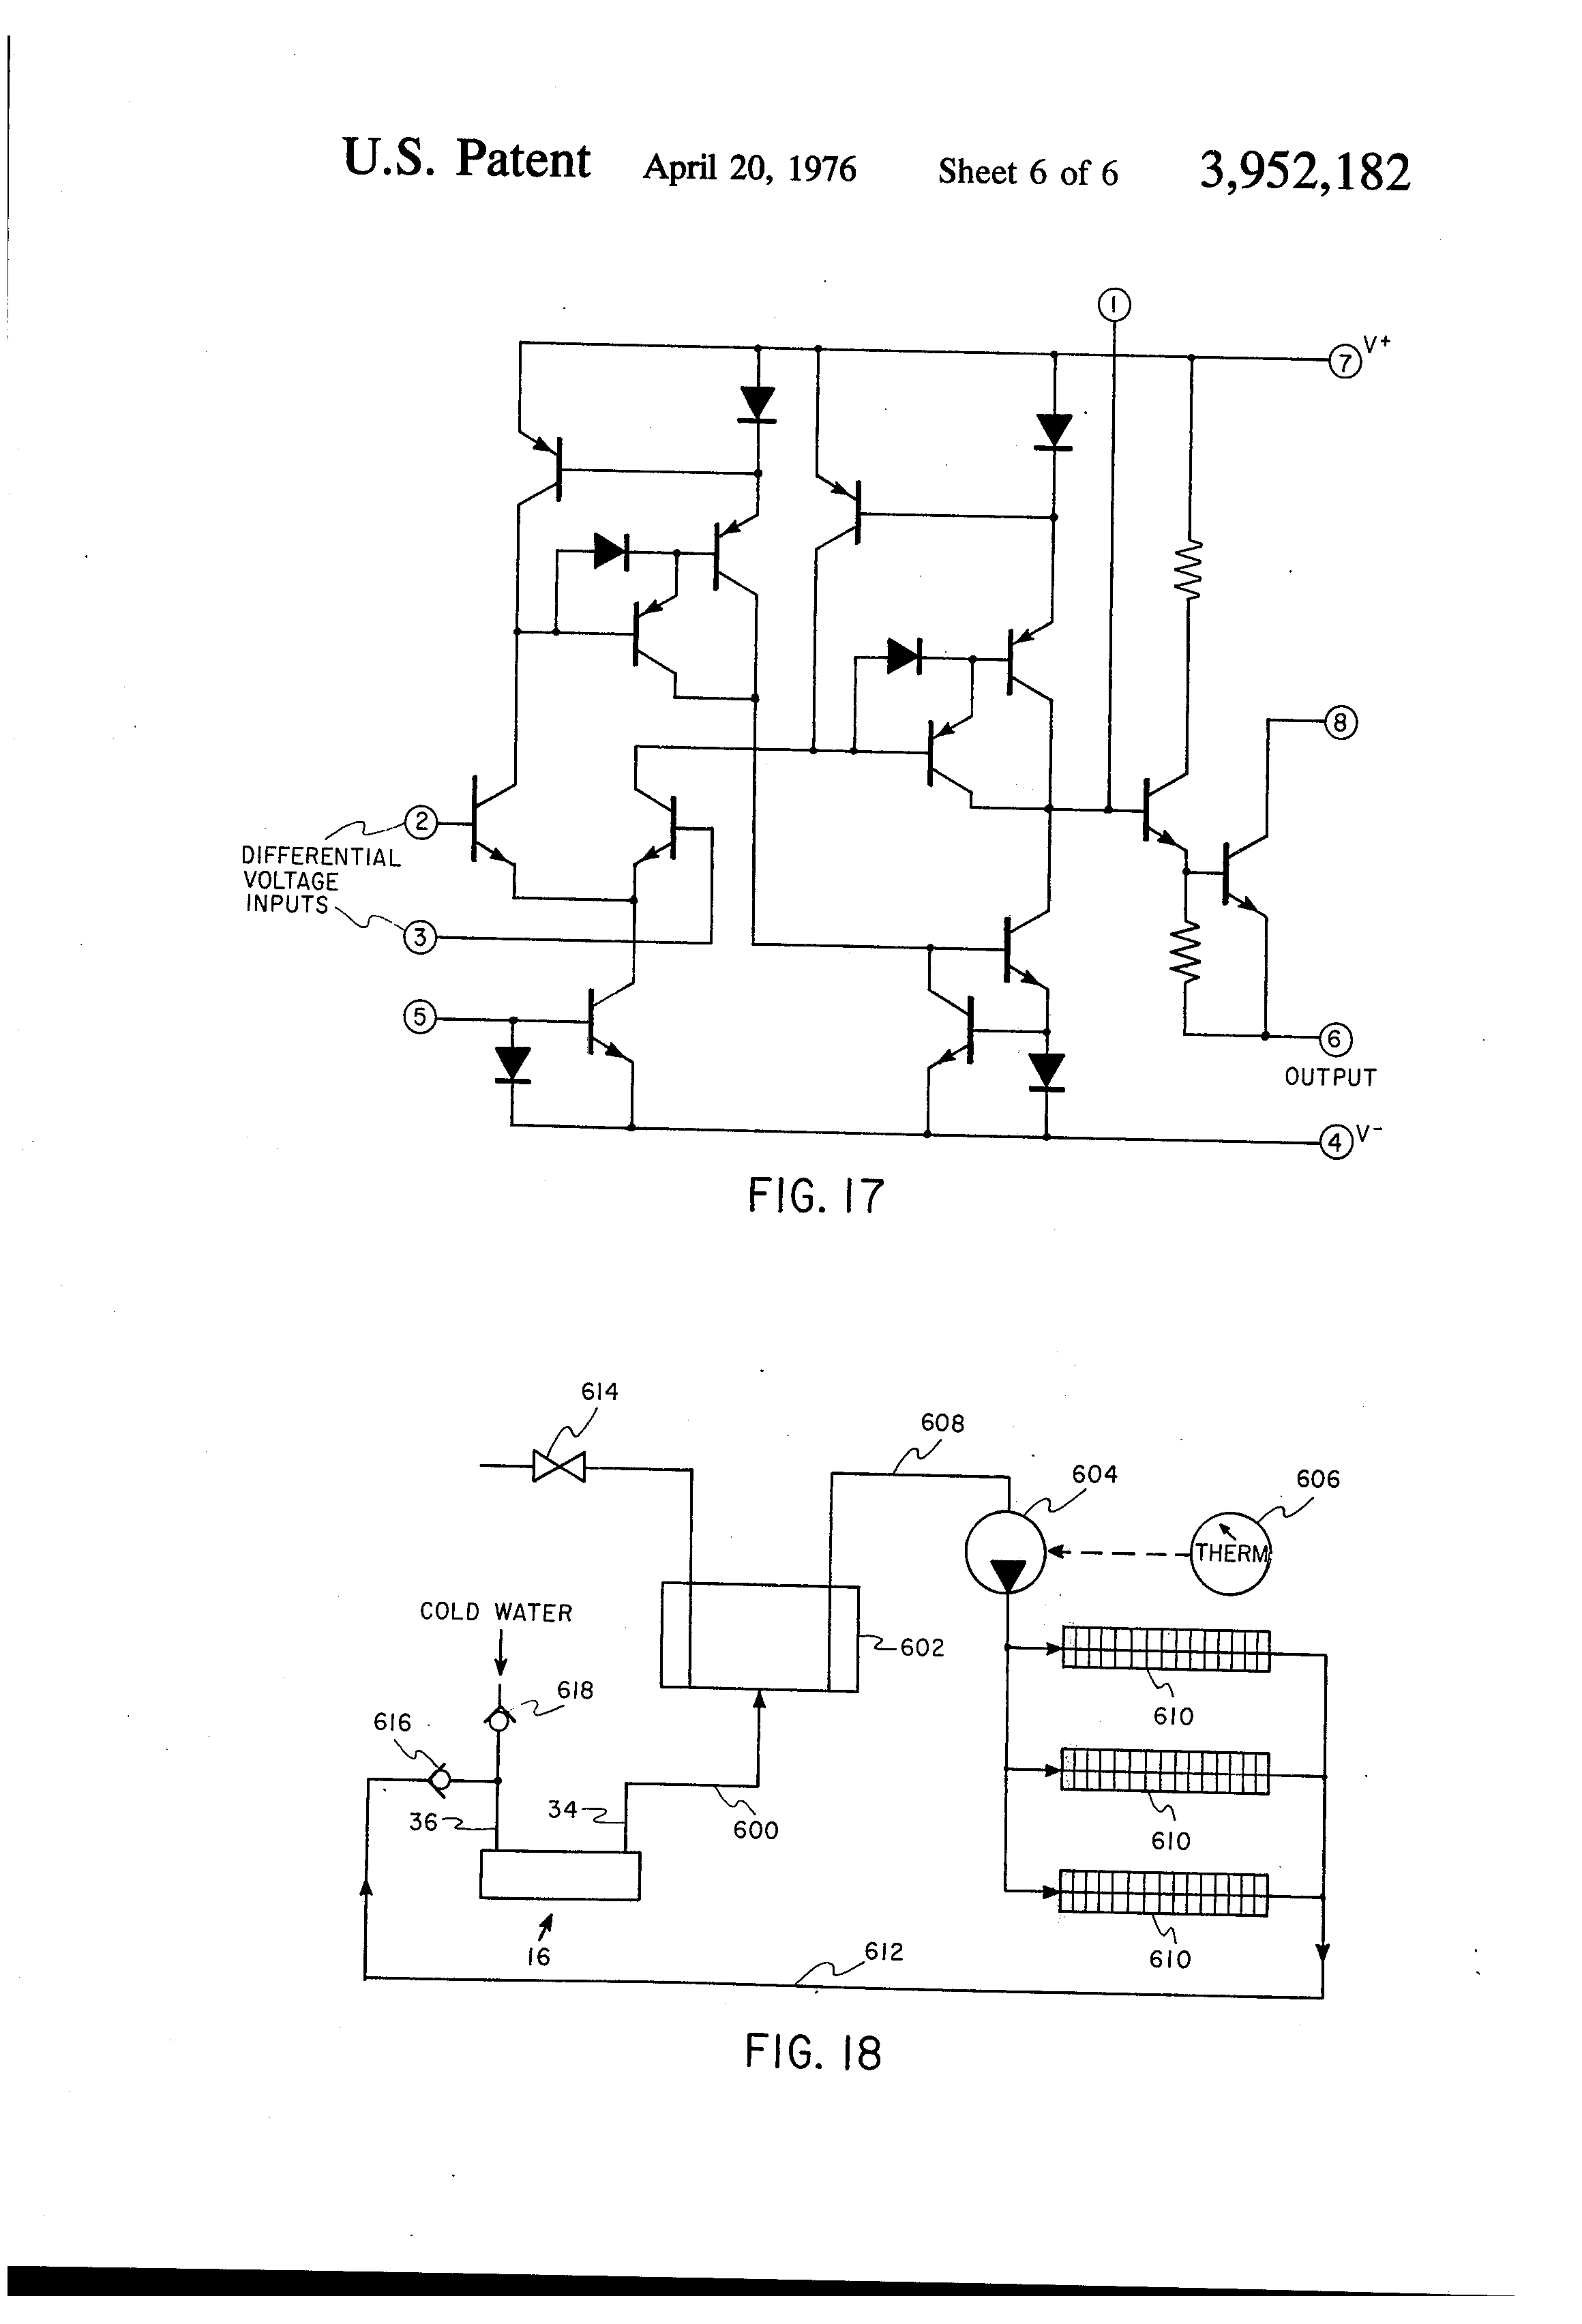 hatco grhdh-2pd wiring diagram